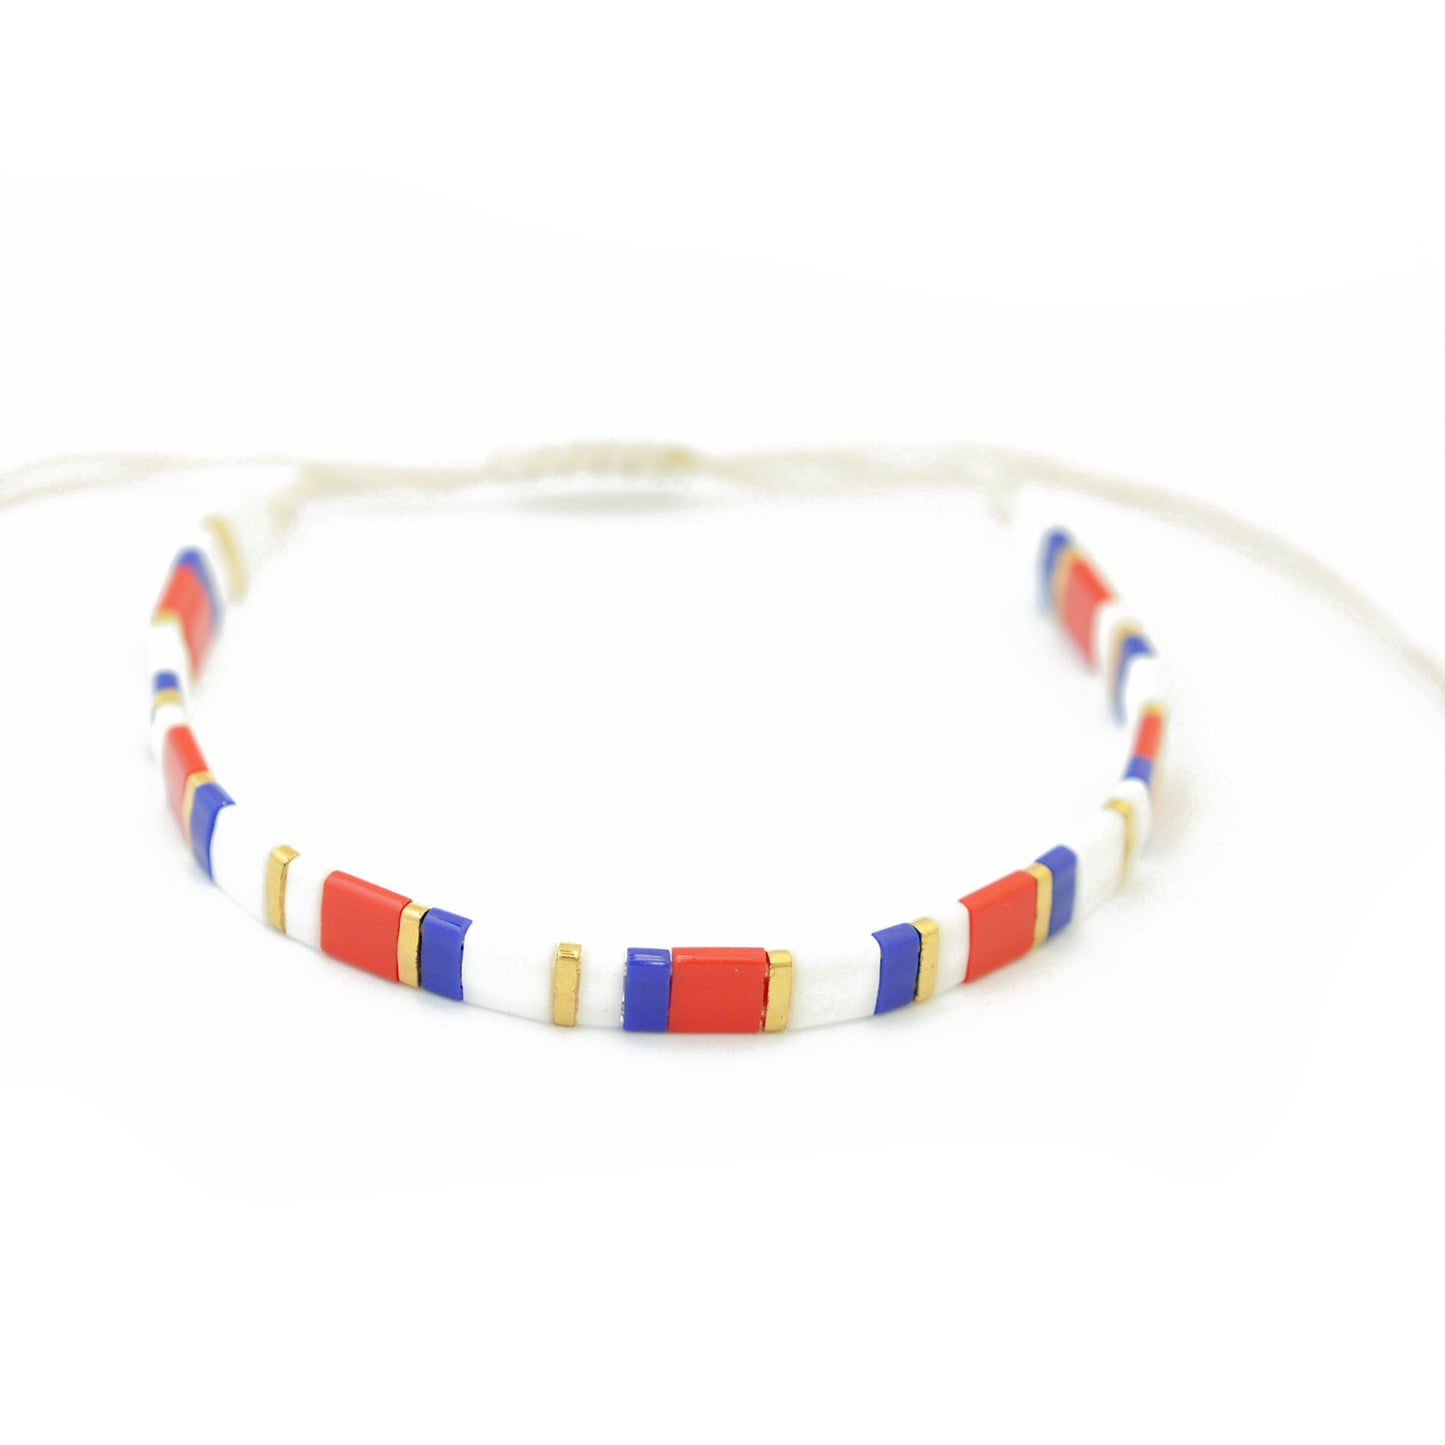 Miyuki Tila beads / white opaque / 5gr. / TL0402